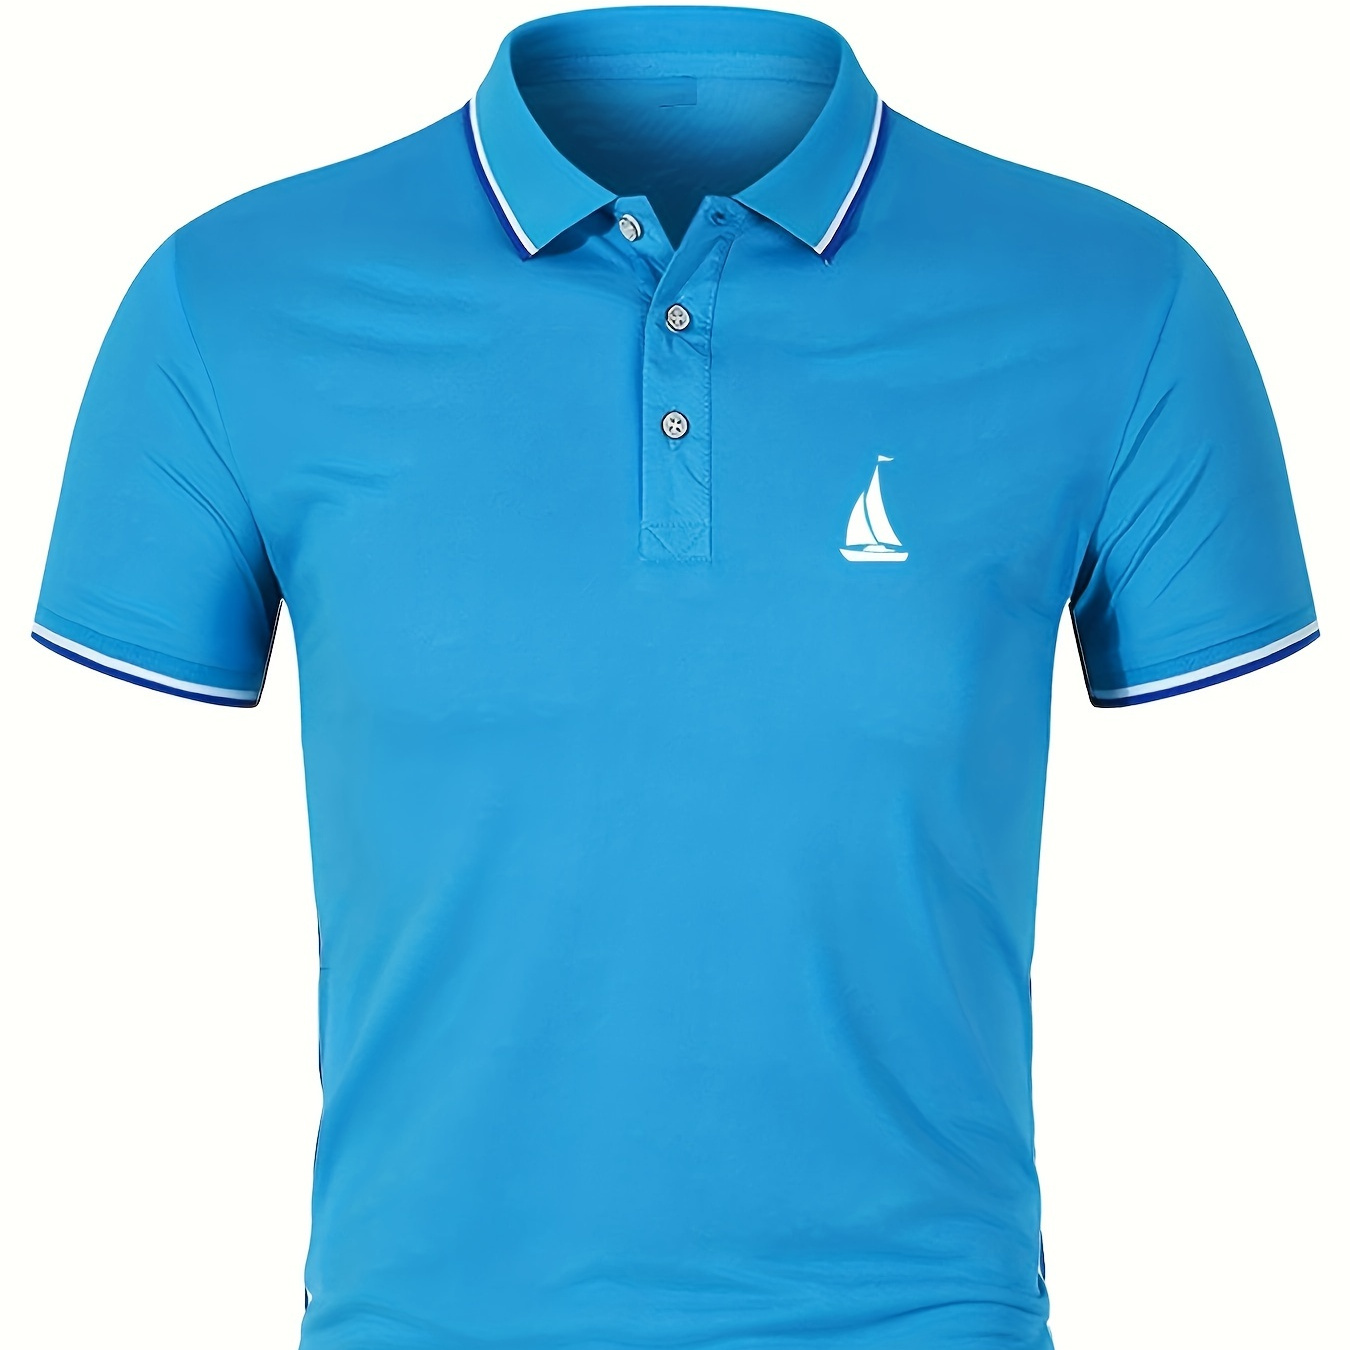 

Men's Golf Shirt, Sailing Ship Print Short Sleeve Breathable Tennis Shirt, Business Casual, Moisture Wicking